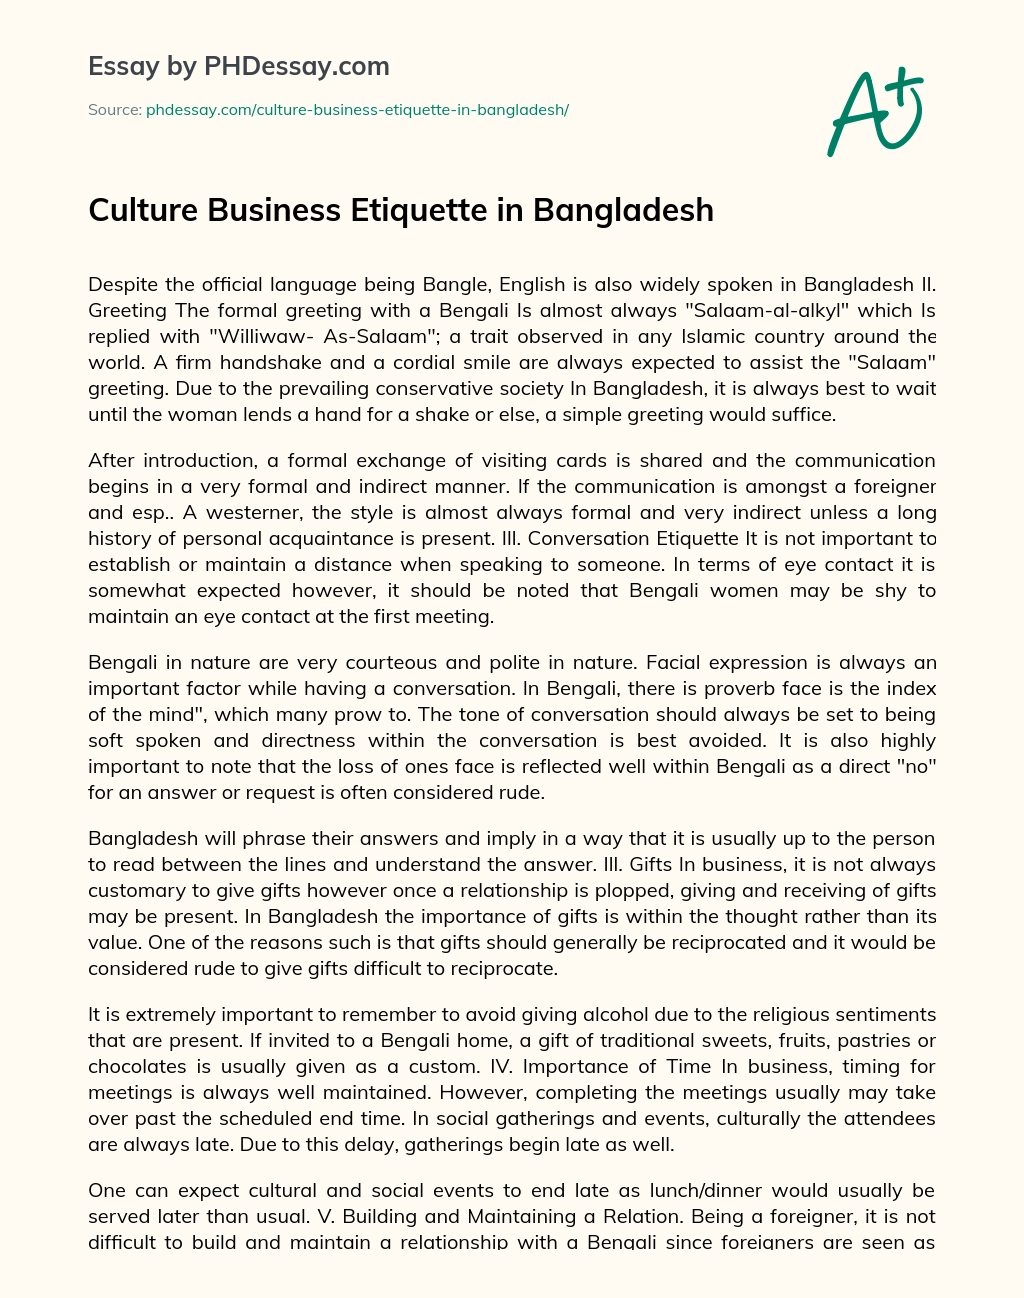 Culture Business Etiquette in Bangladesh essay